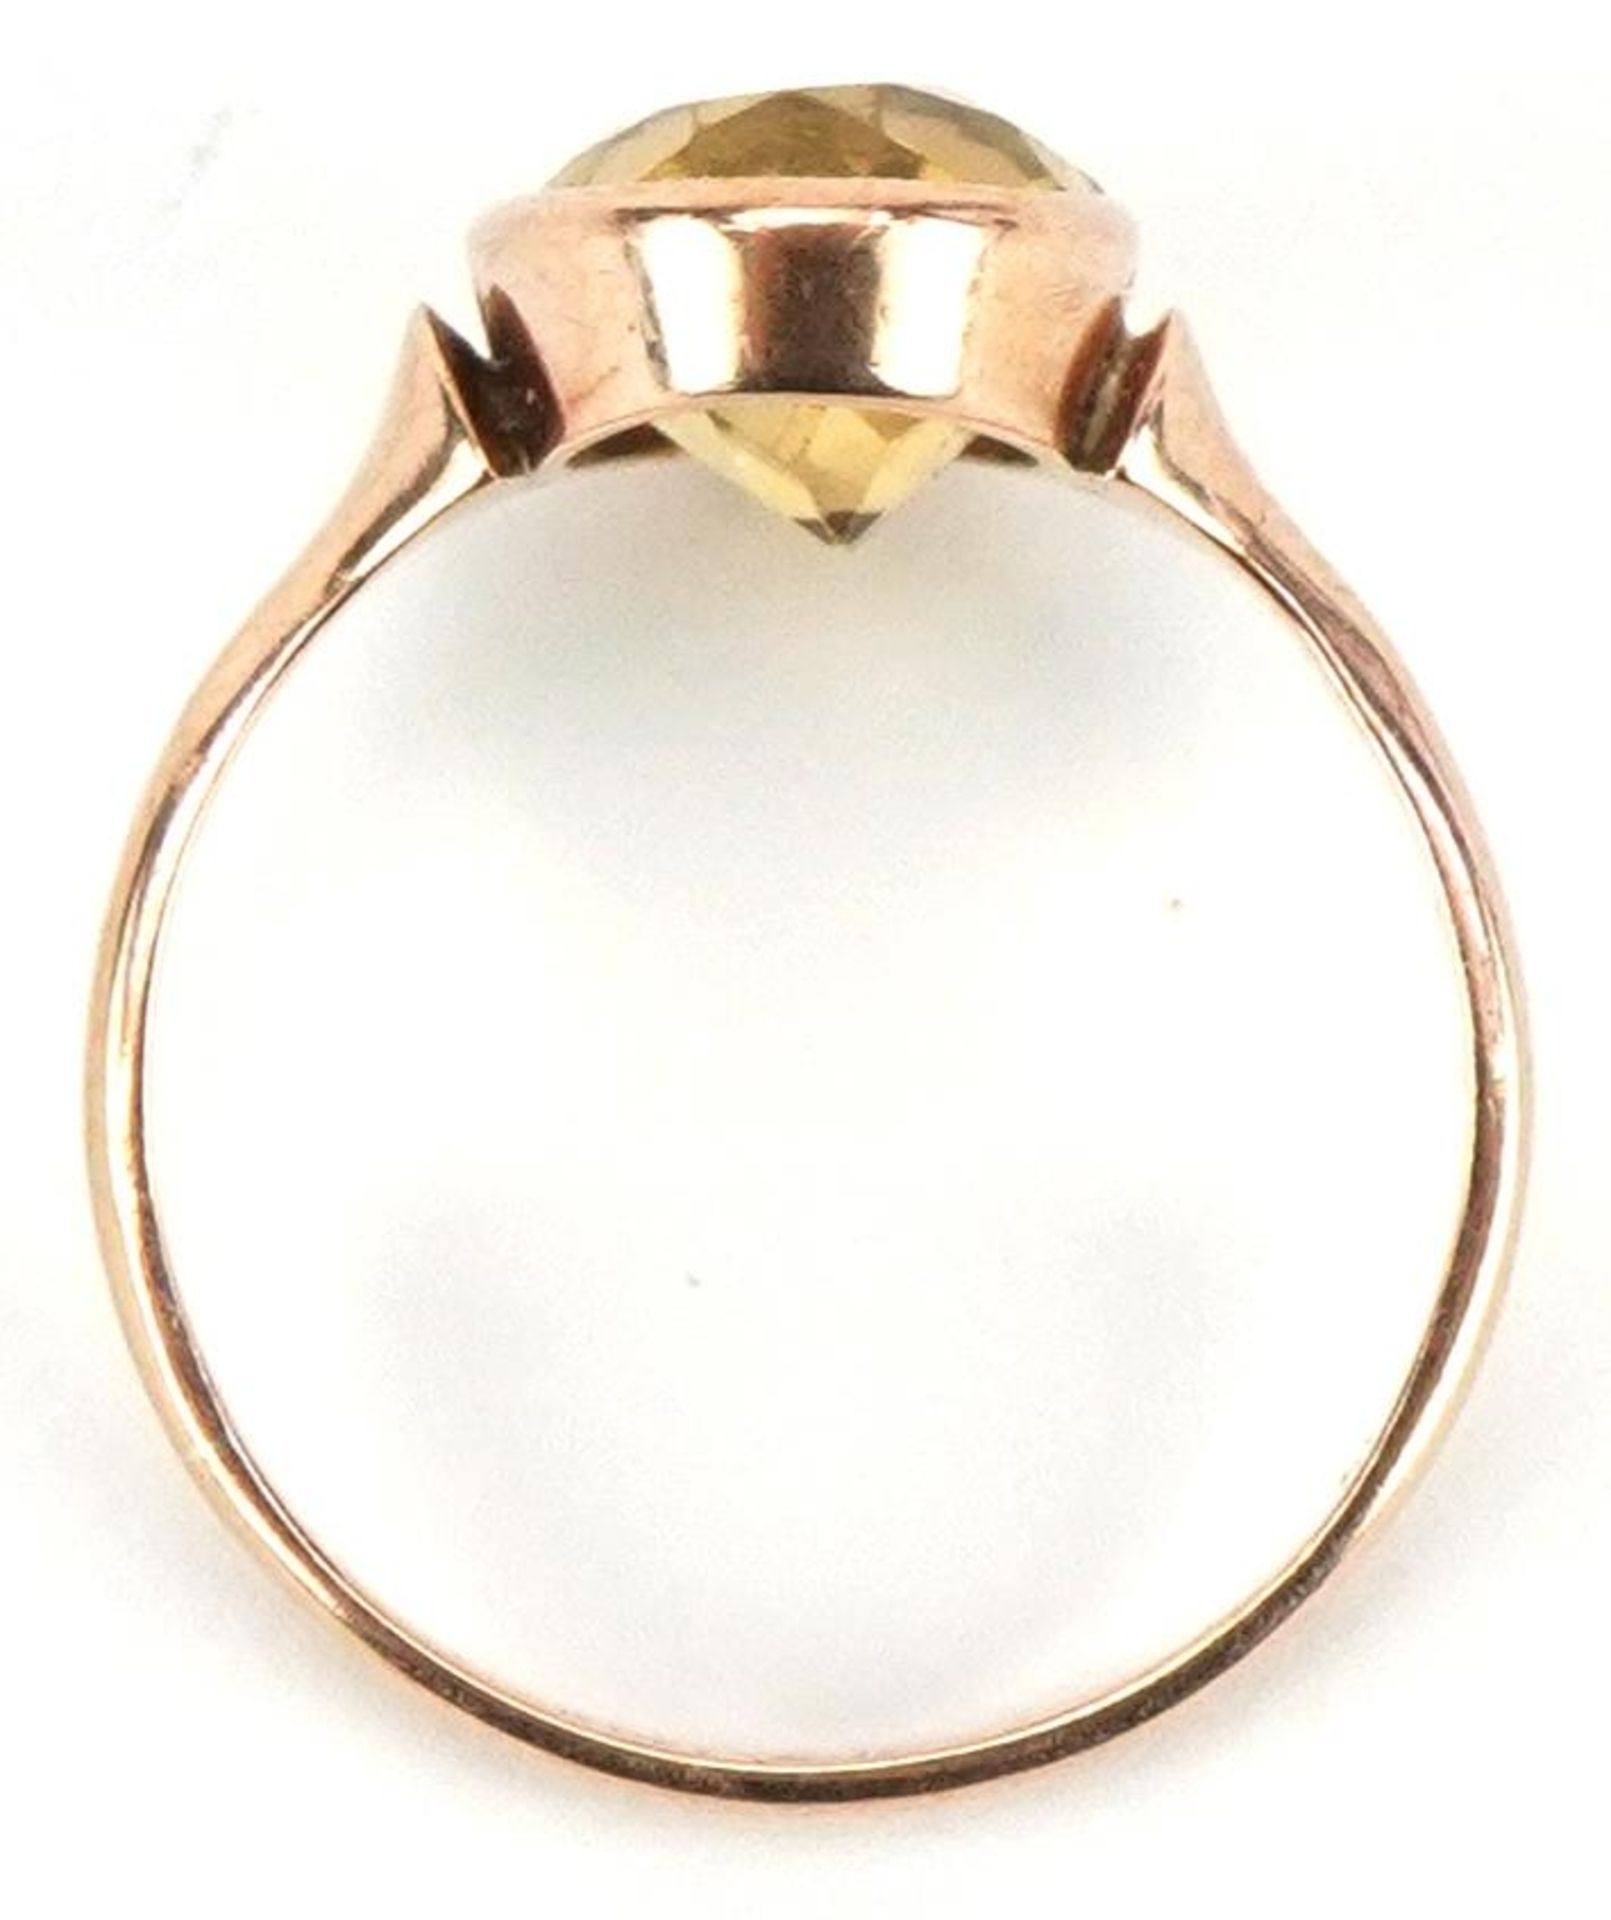 9ct rose gold citrine ring, size K, 2.5g - Image 3 of 6